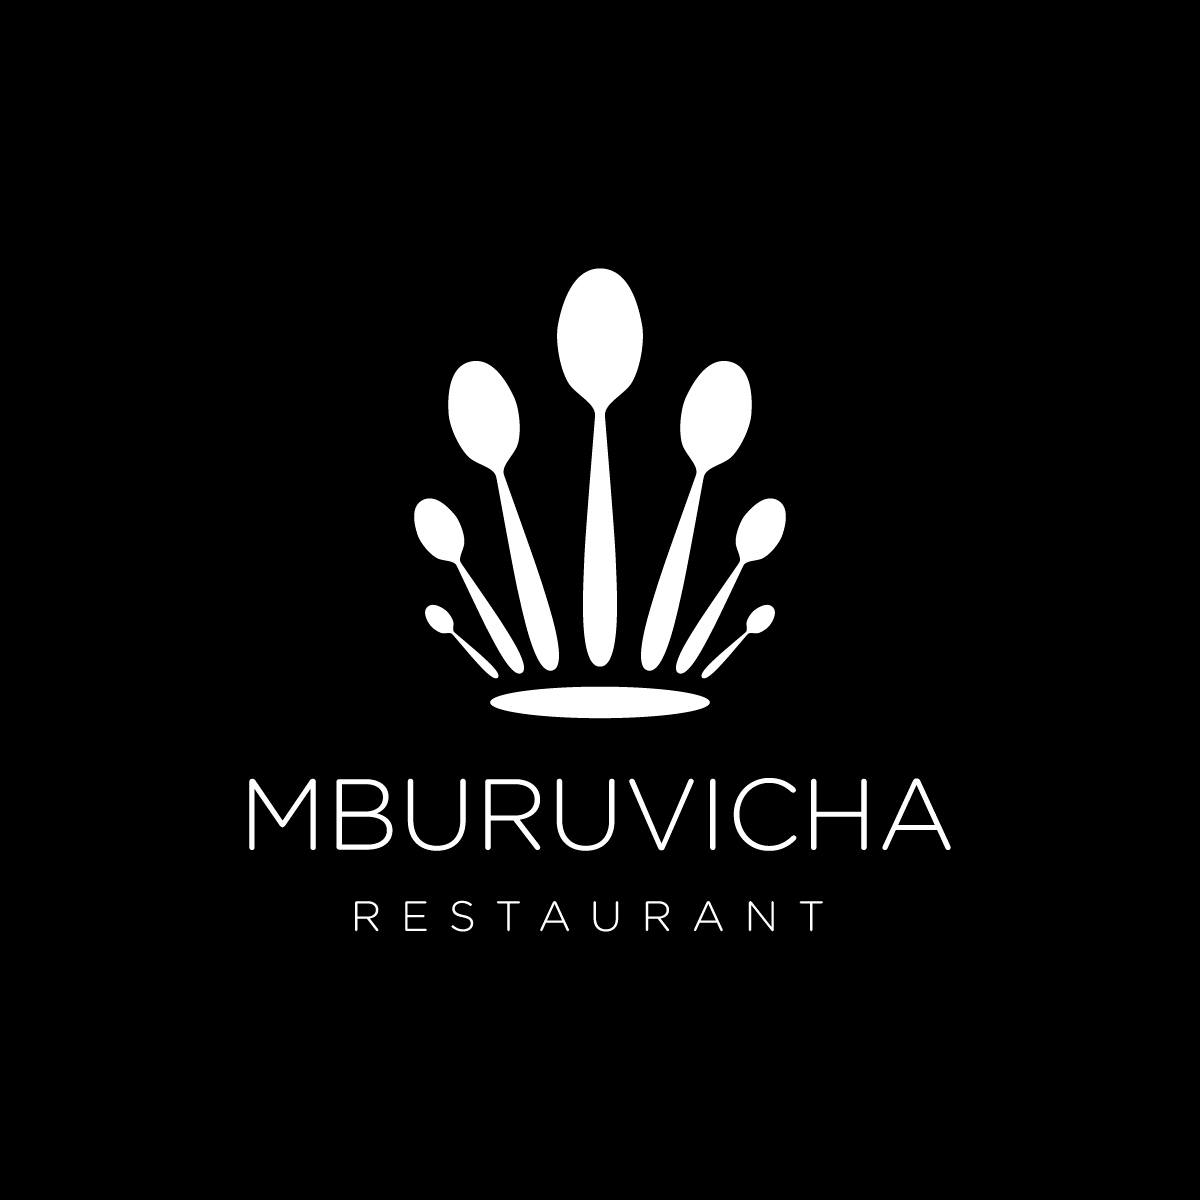 Restaurant Mburuvicha - Encarnación